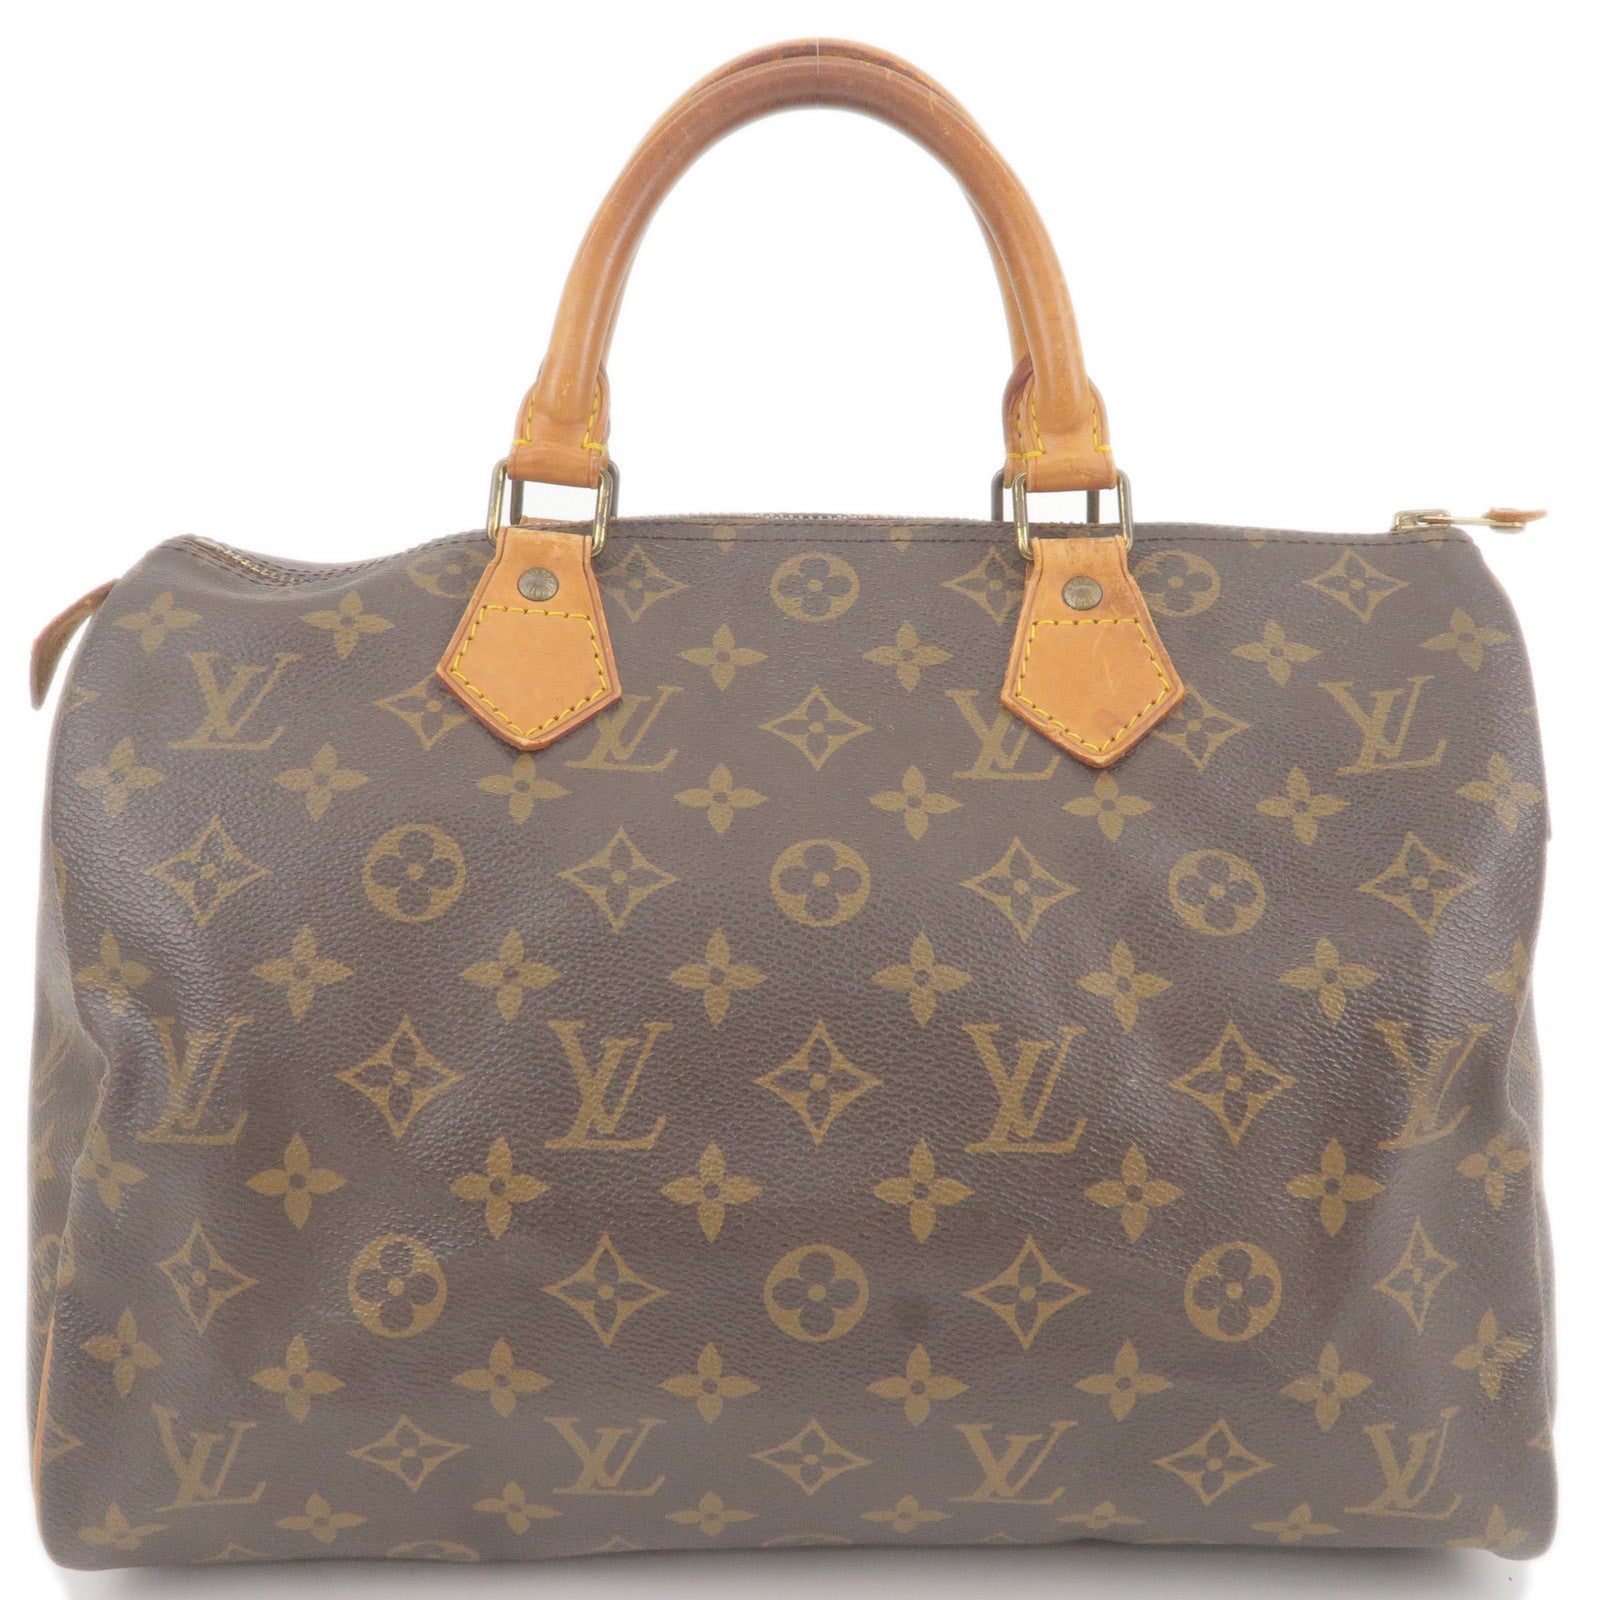 Buy Louis Vuitton monogram LOUIS VUITTON Speedy 30 Monogram M41526